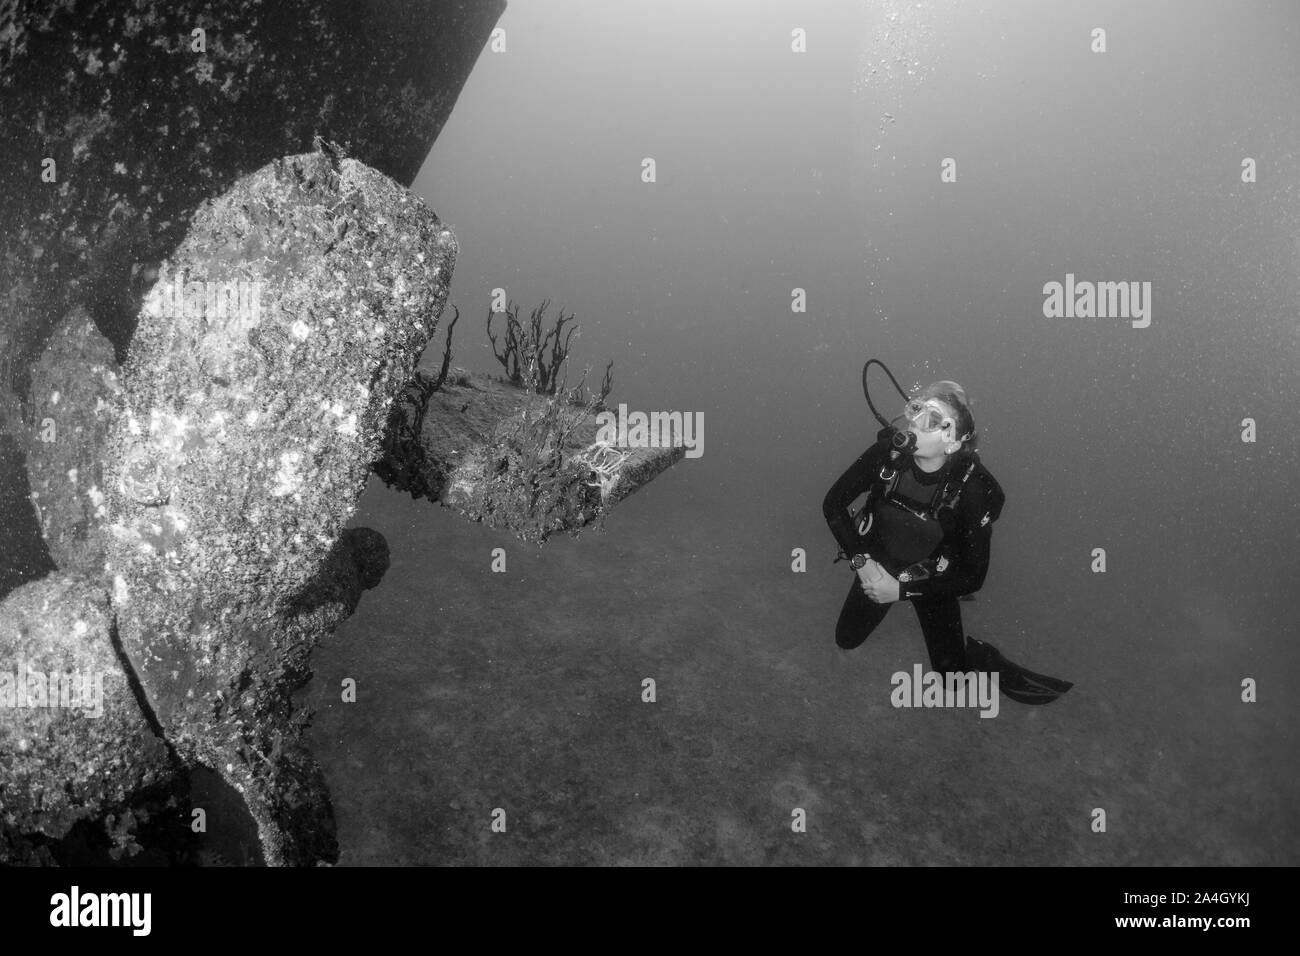 A scuba diver admires the size of a propeller on the C-59 shipwreck near La Paz, Mexico. Stock Photo